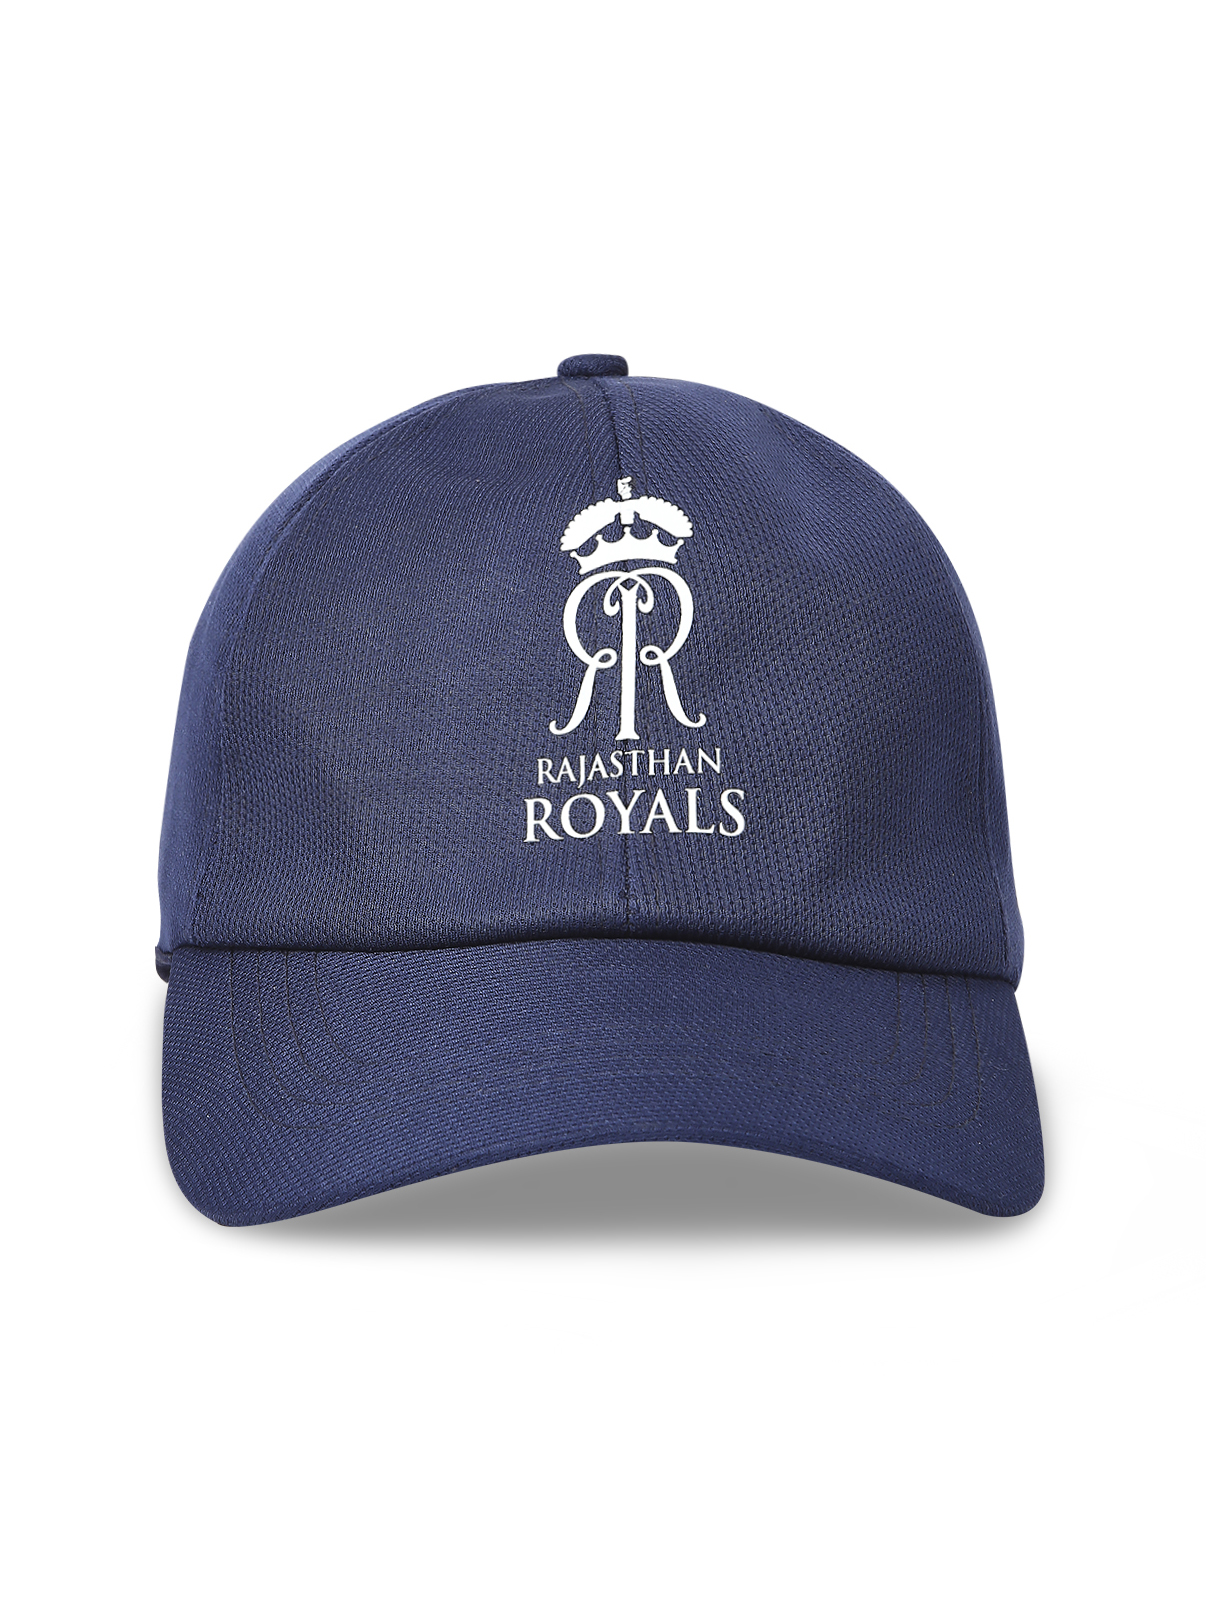 Buy Rajasthan Royals Logo Printed Cap From Fancode Shop.